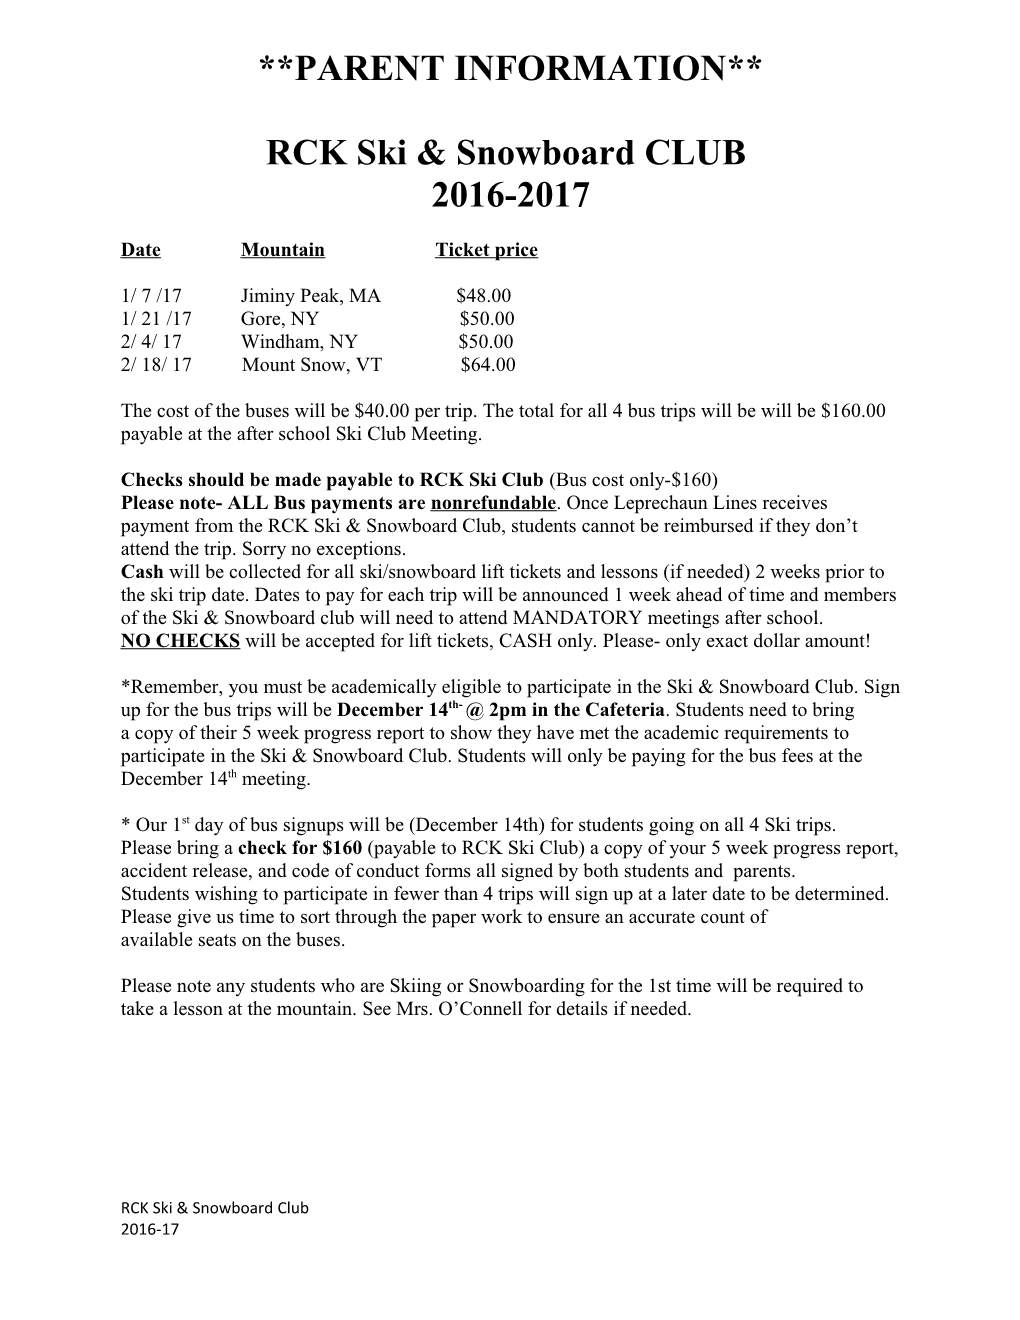 RCK Ski & Snowboard CLUB